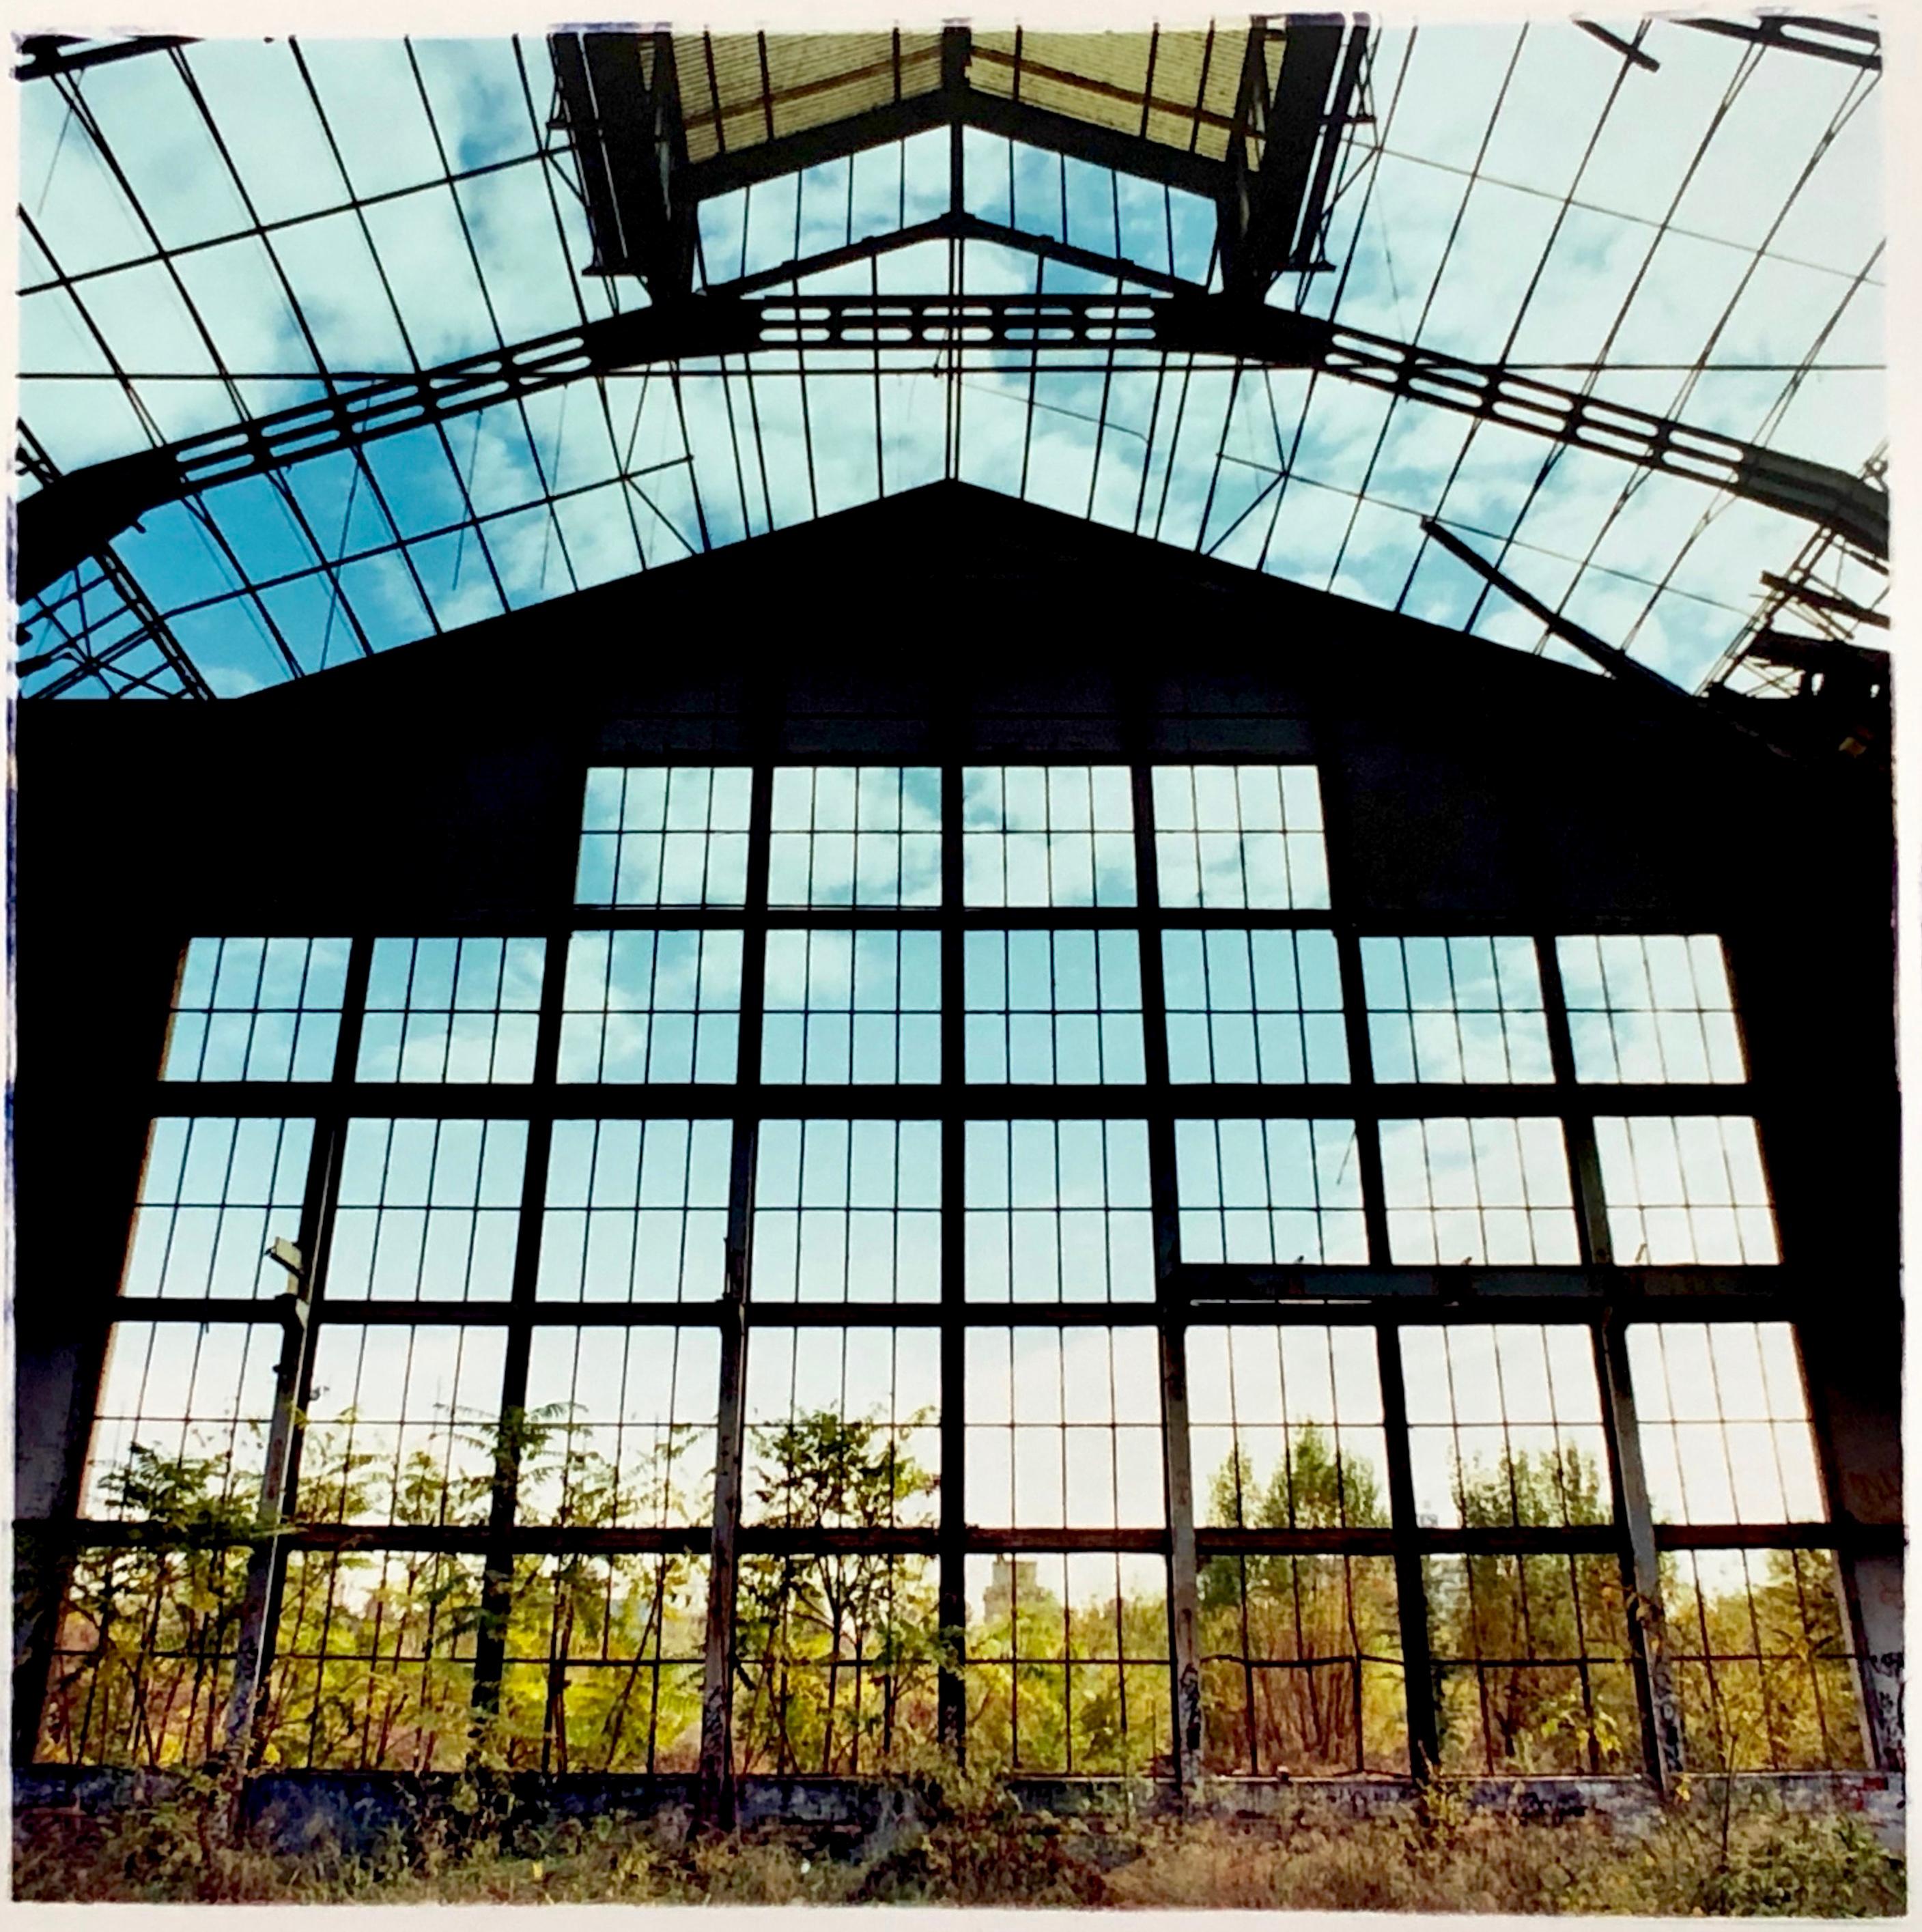 Richard Heeps Print - Big Window, Lambrate, Milan - Industrial architecture Italian color photography